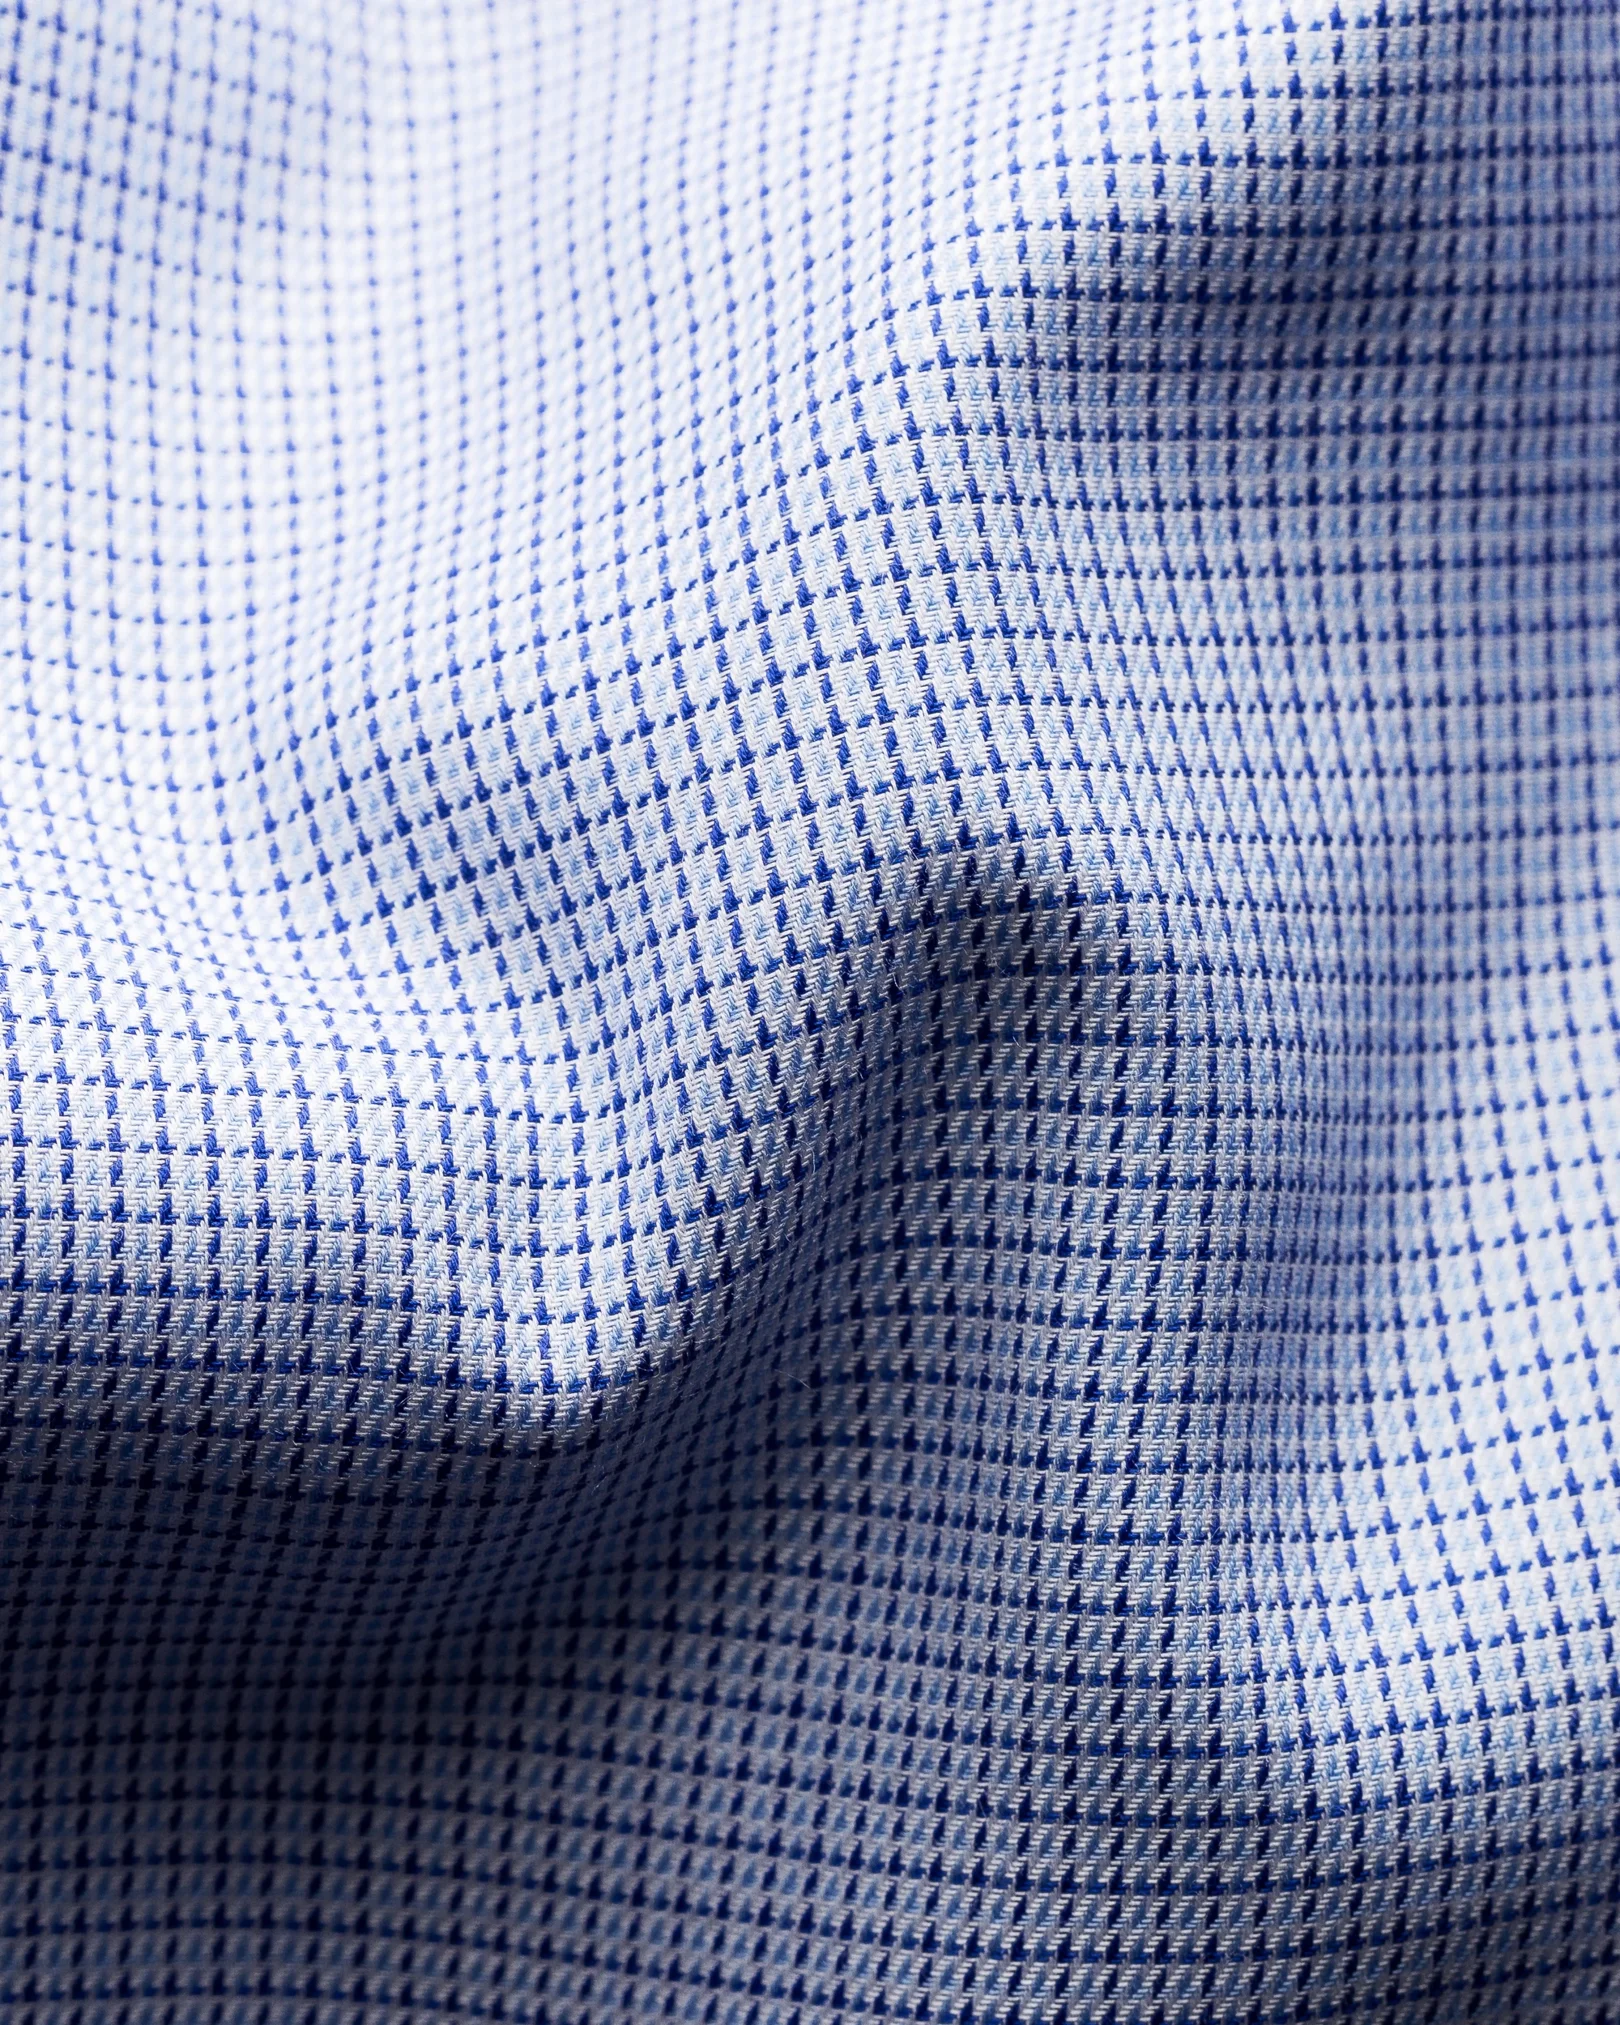 Eton - blue cotton lyocell stretch shirt